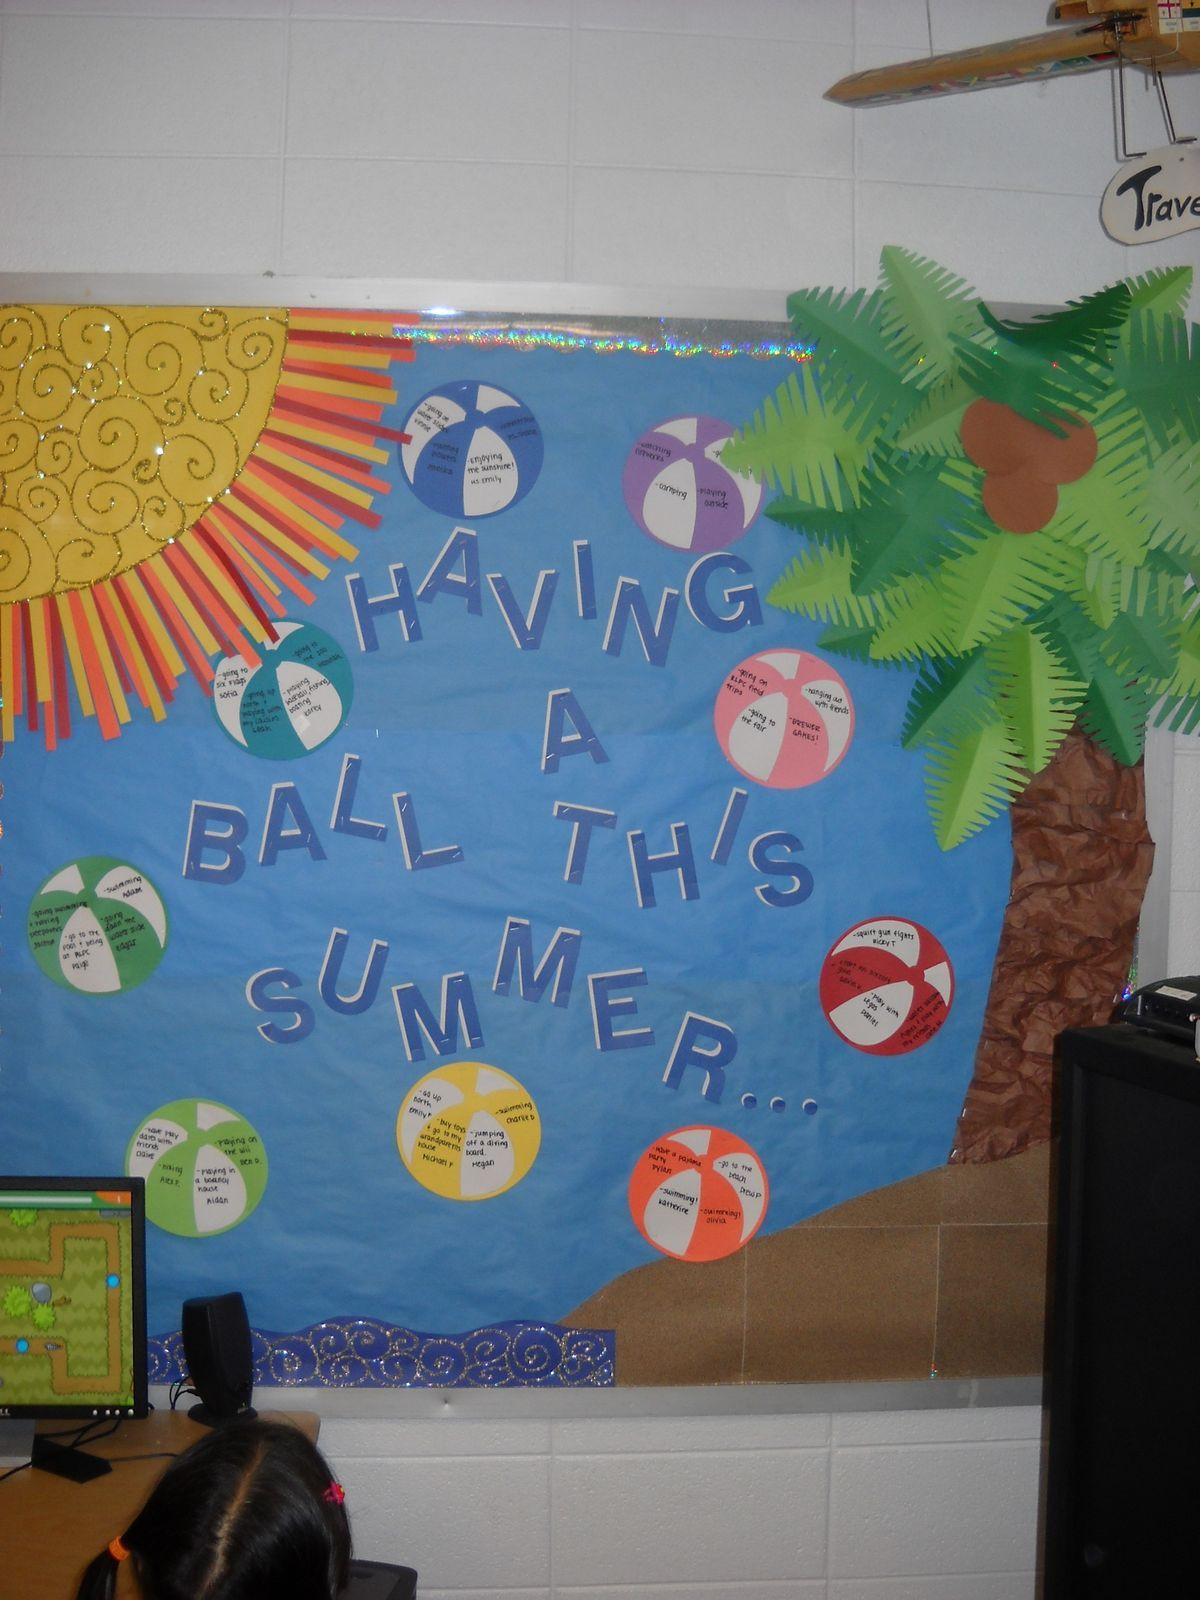 Summer Camp Bulletin Board Ideas
 Having A Ball This Summer Classroom Bulletin Board Idea